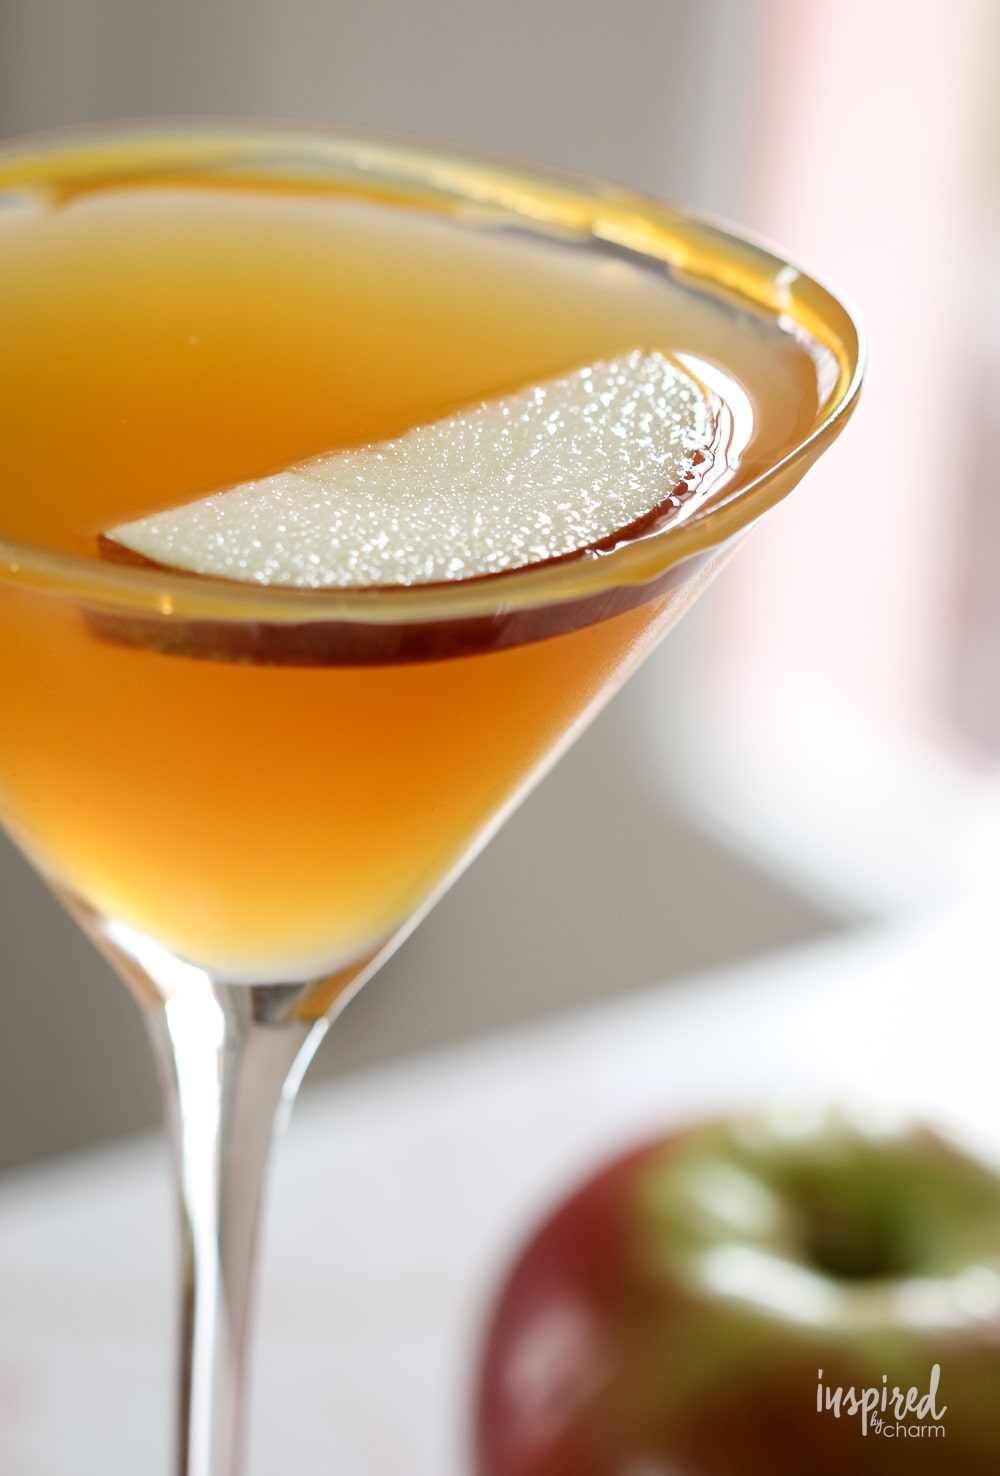 caramel apple martini in martini glass with caramel rim and apple slice garnish. 